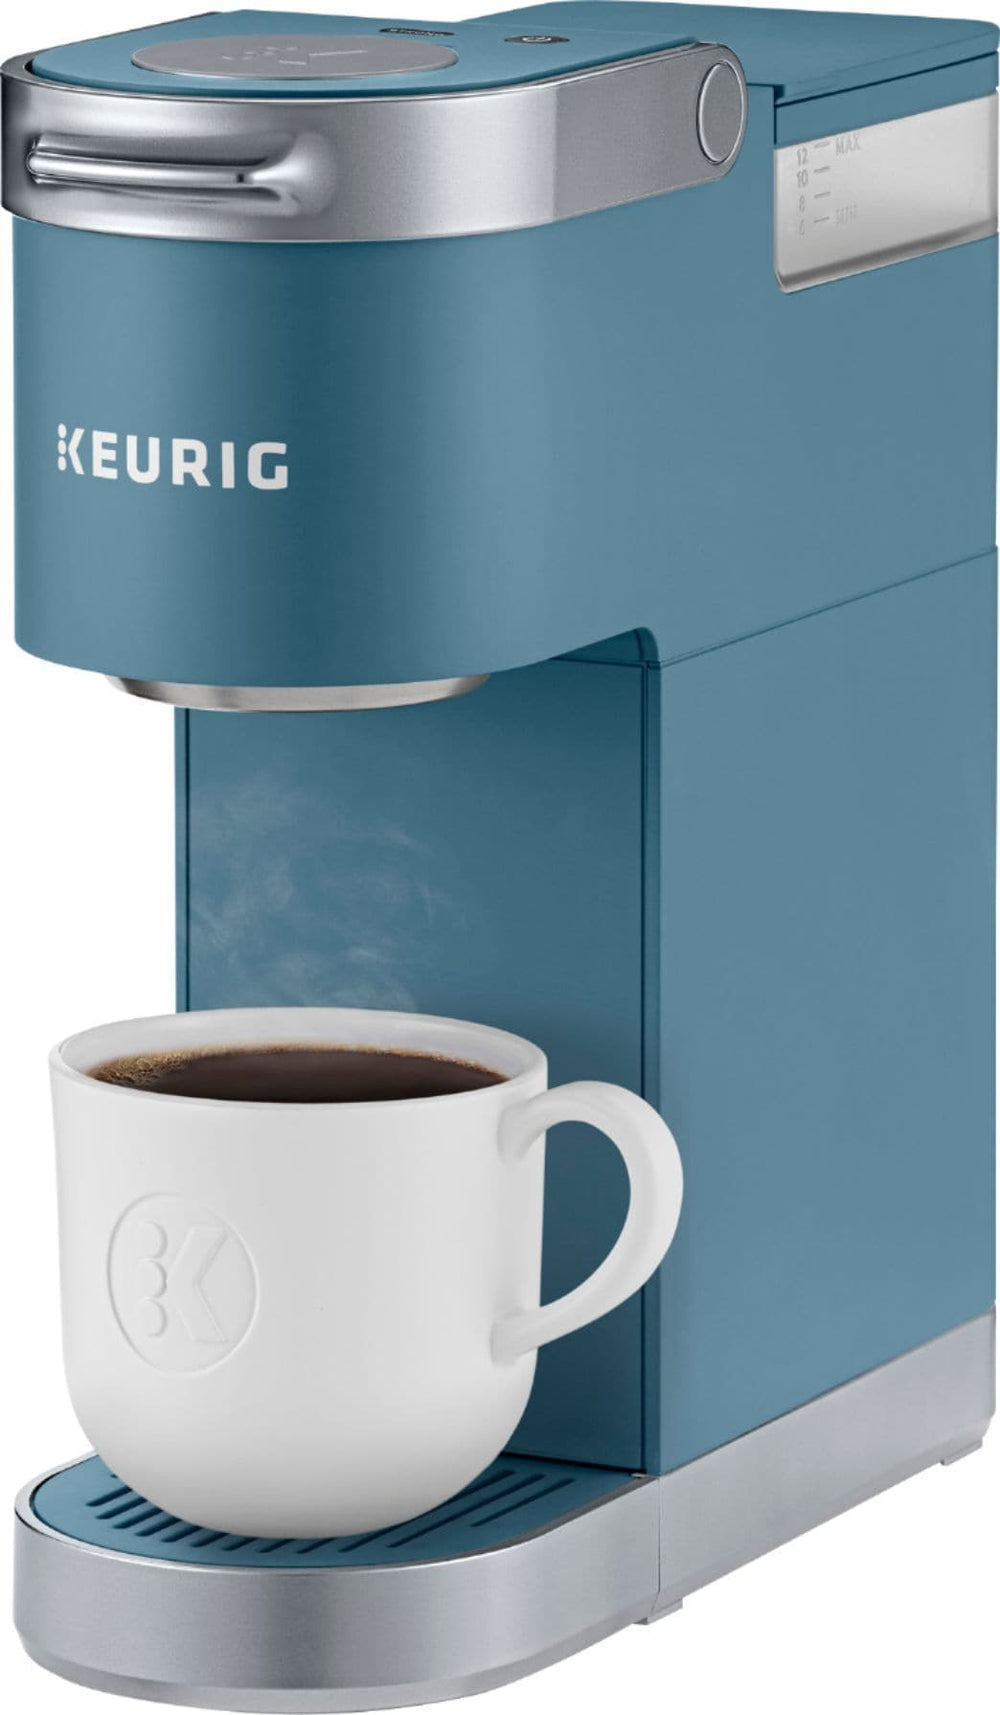 Keurig - K-Mini Plus Single Serve K-Cup Pod Coffee Maker - Evening Teal_1